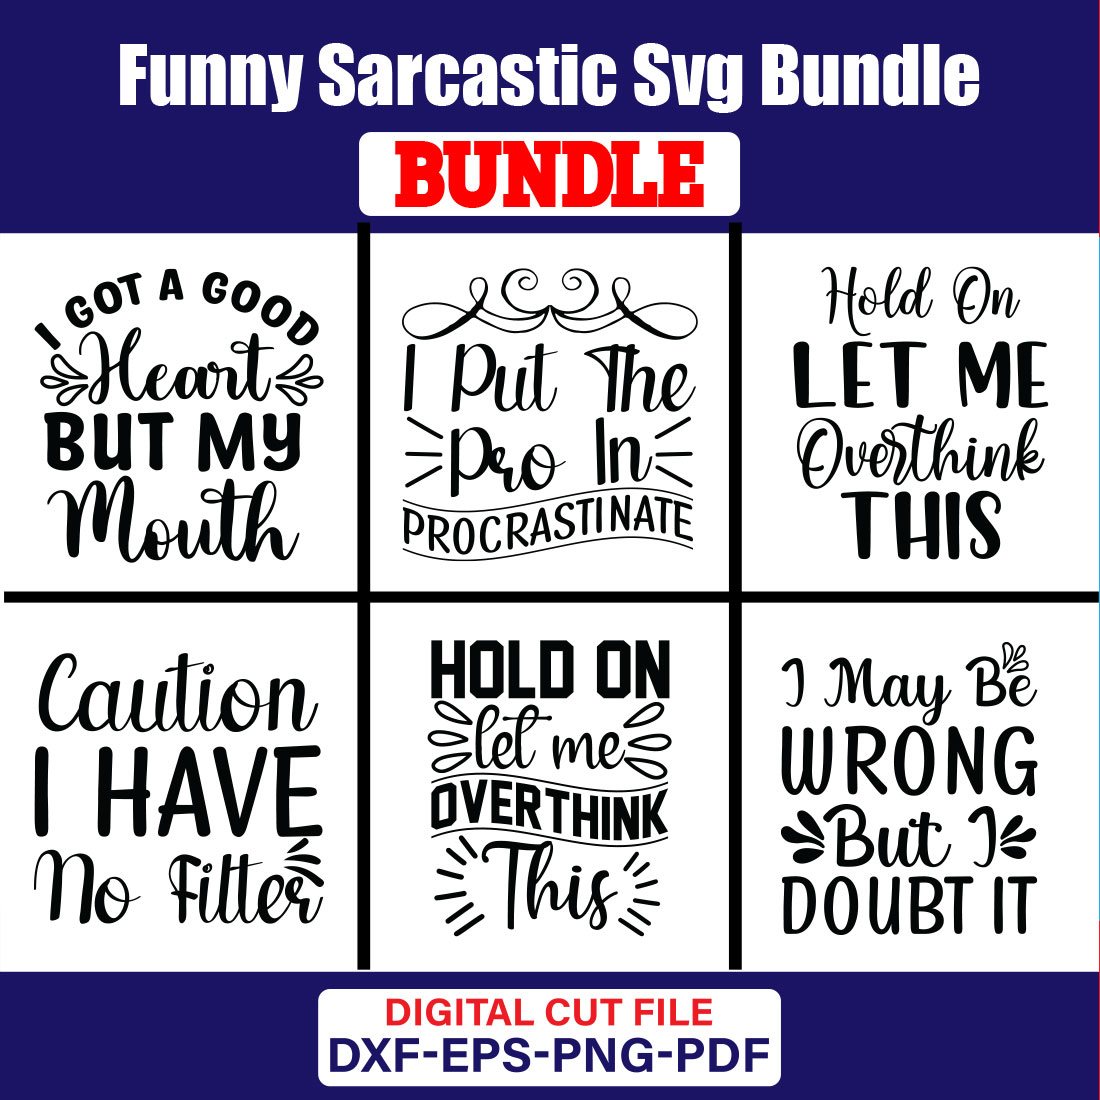 Funny Sarcastic T-shirt Design Bundle Vol-01 cover image.